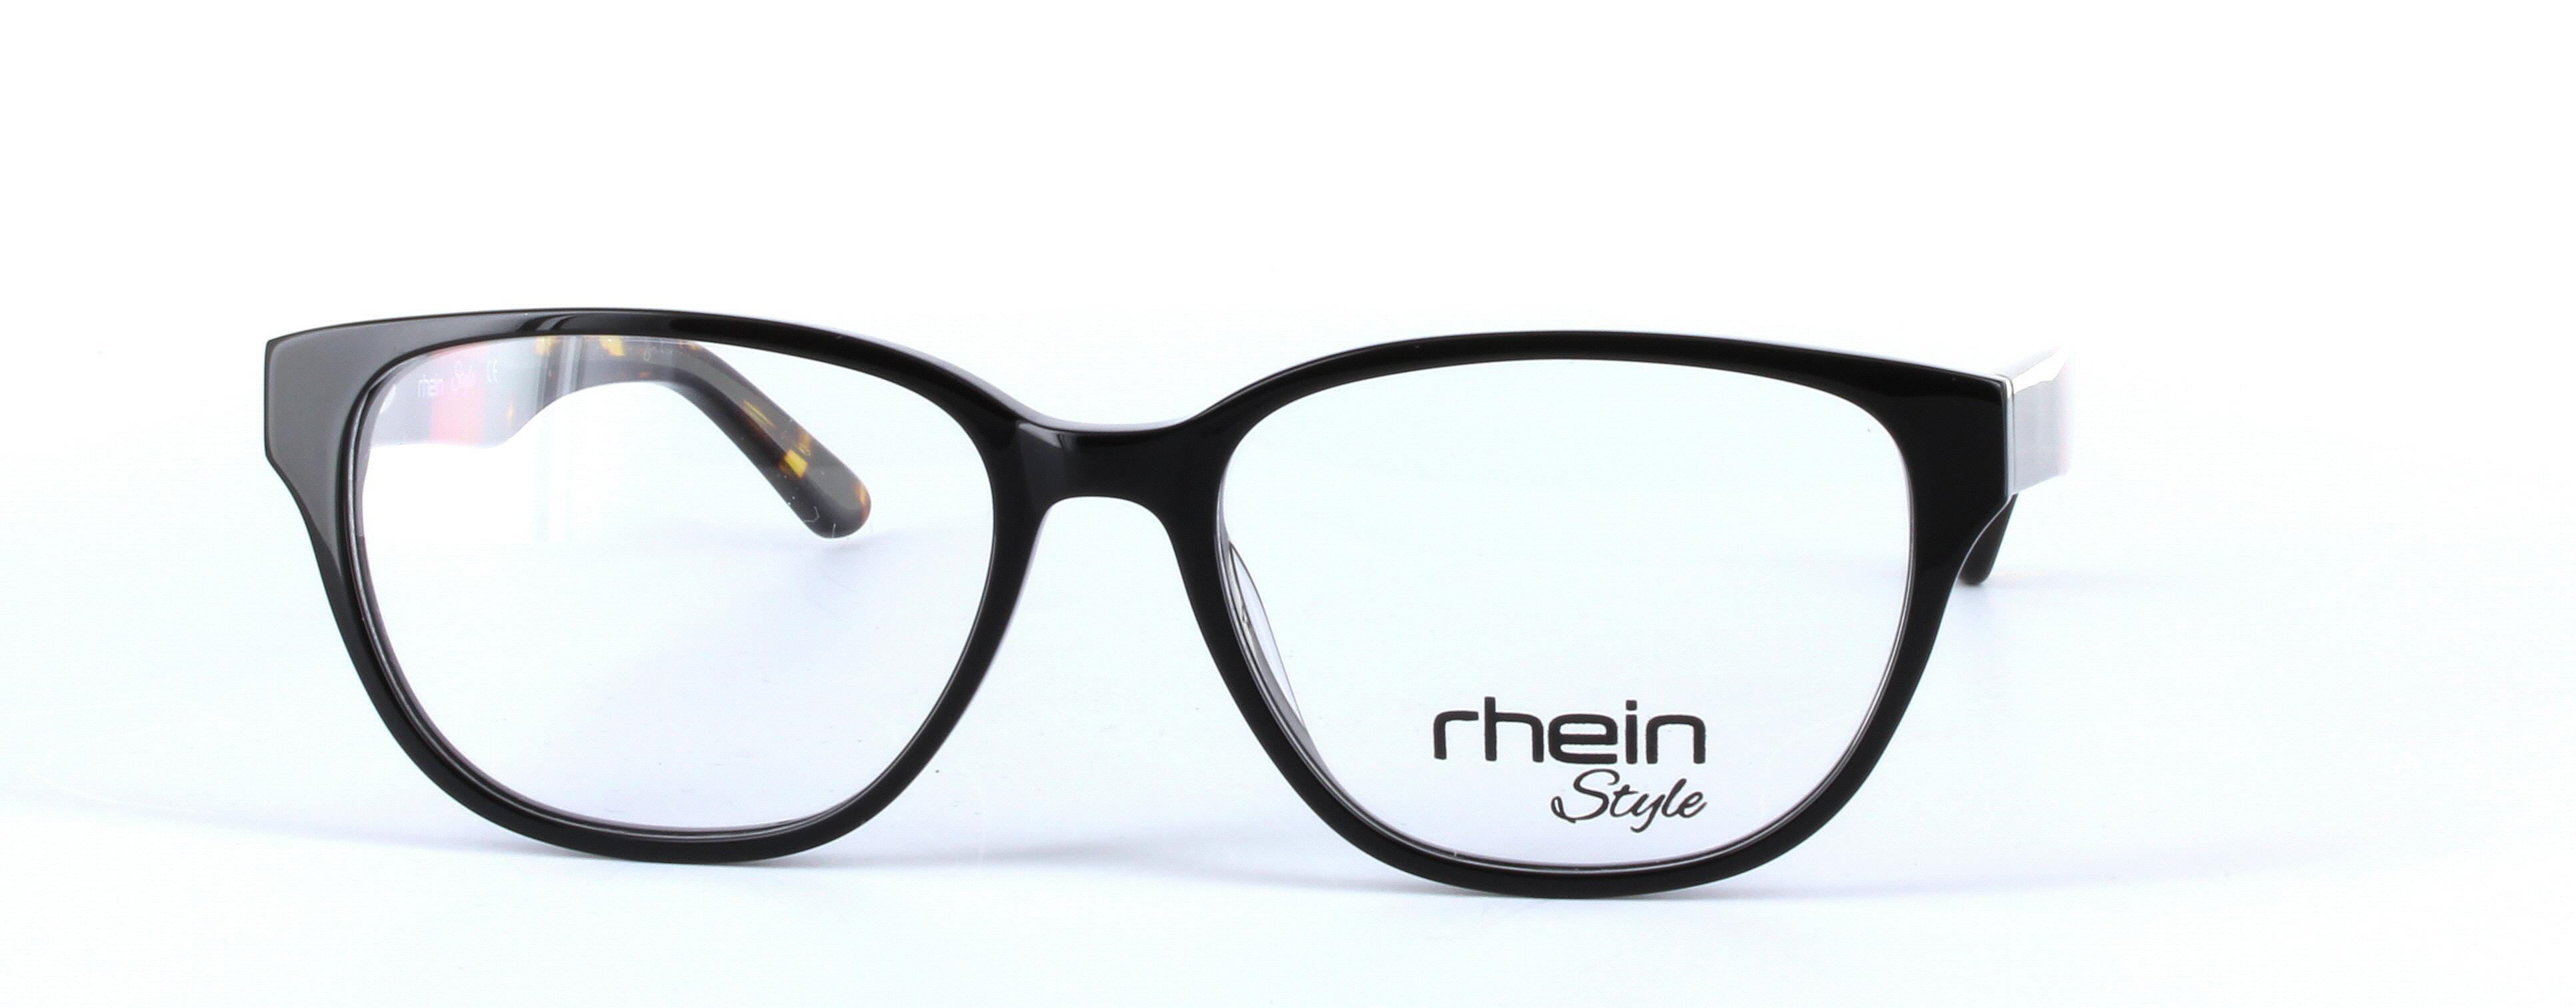 Felicia Black Full Rim Oval Round Plastic Glasses - Image View 5